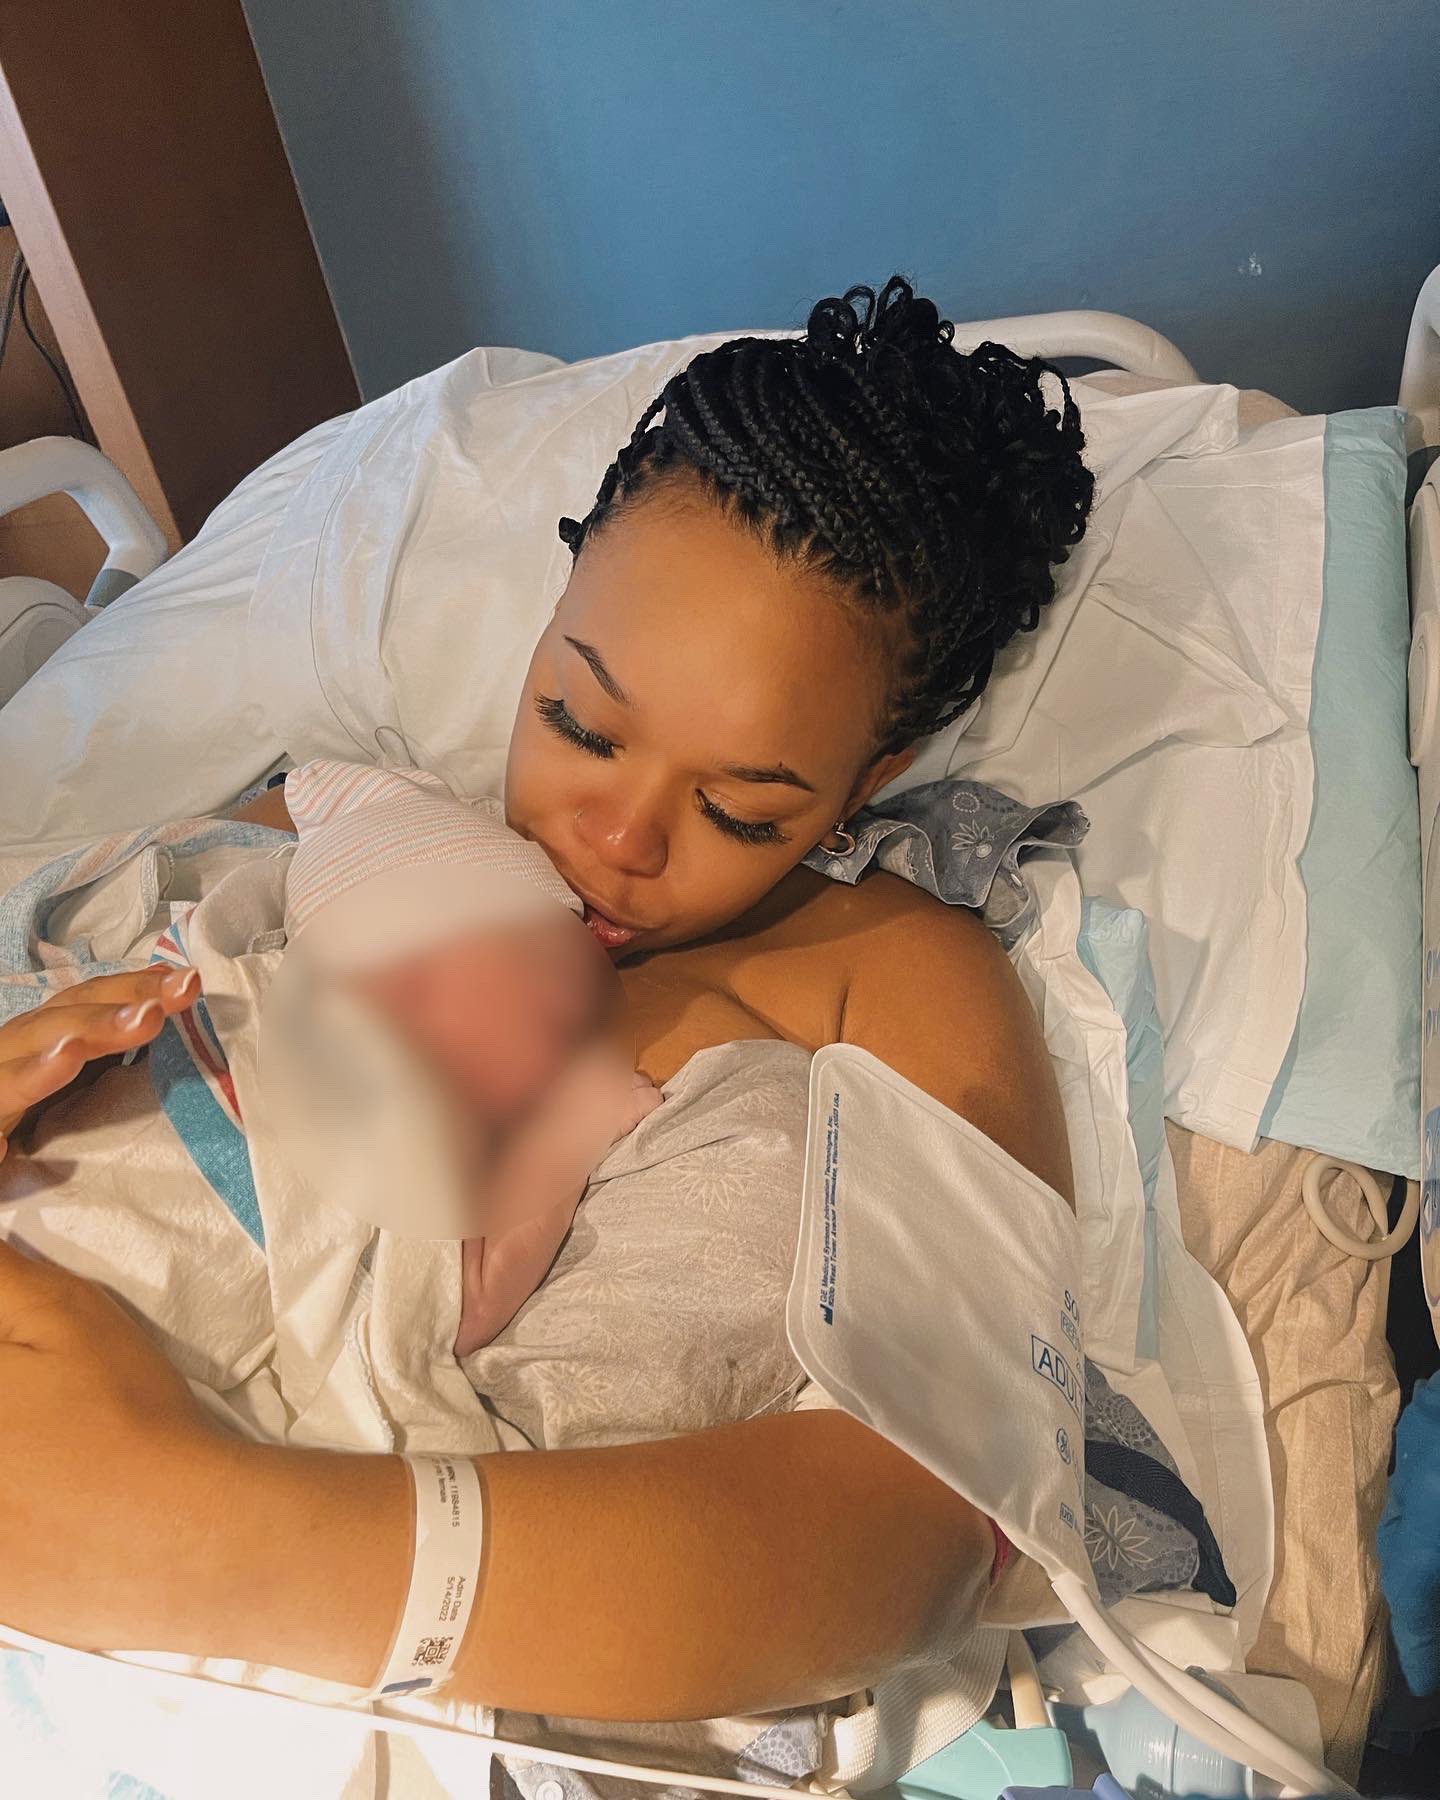 Jada Sayles holding her newborn baby in the hospital